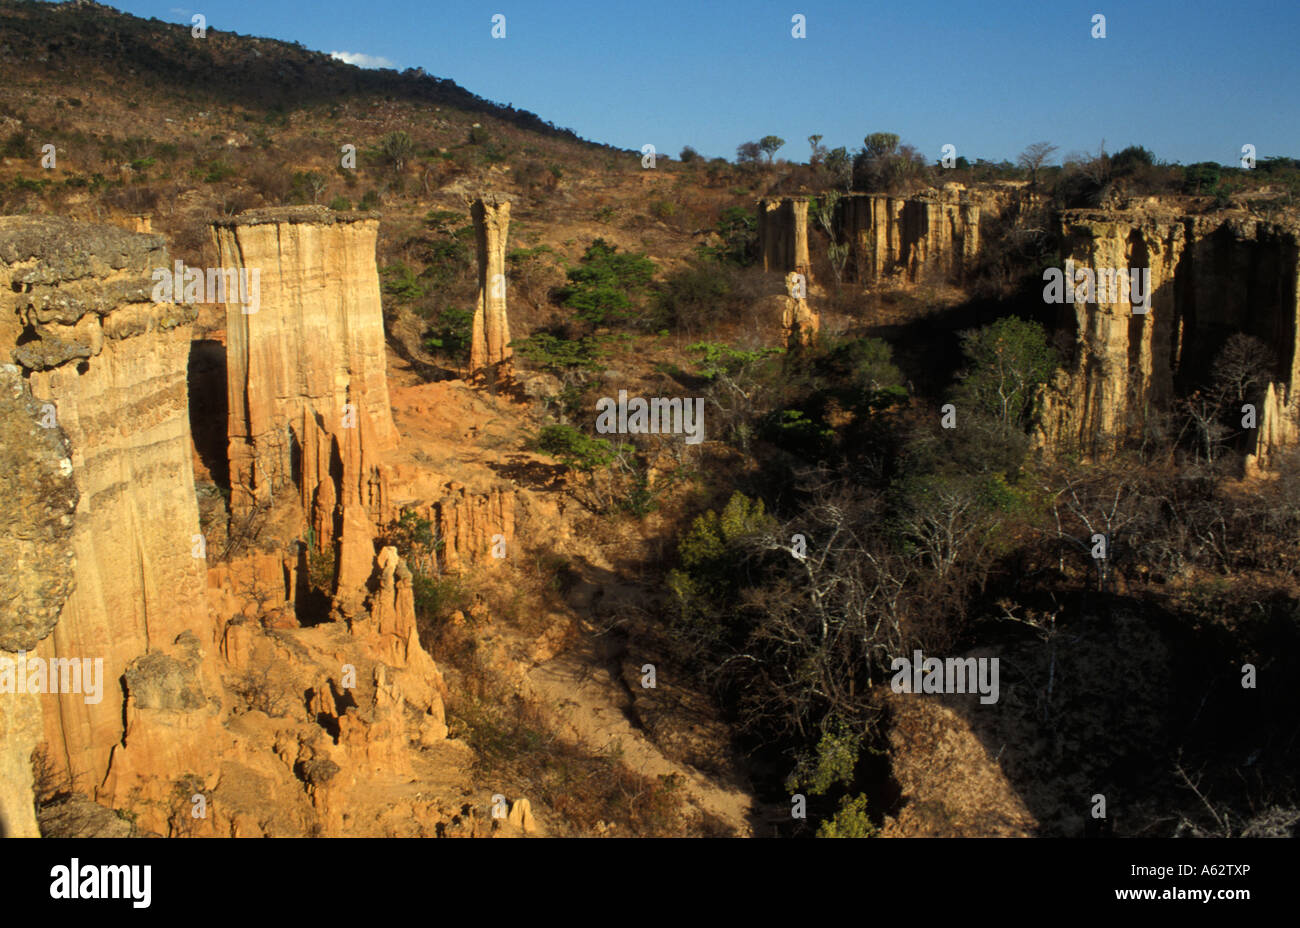 Isimila stone age site 10m high sandstone pillars in a dry riverbed Iringa Tanzania Stock Photo